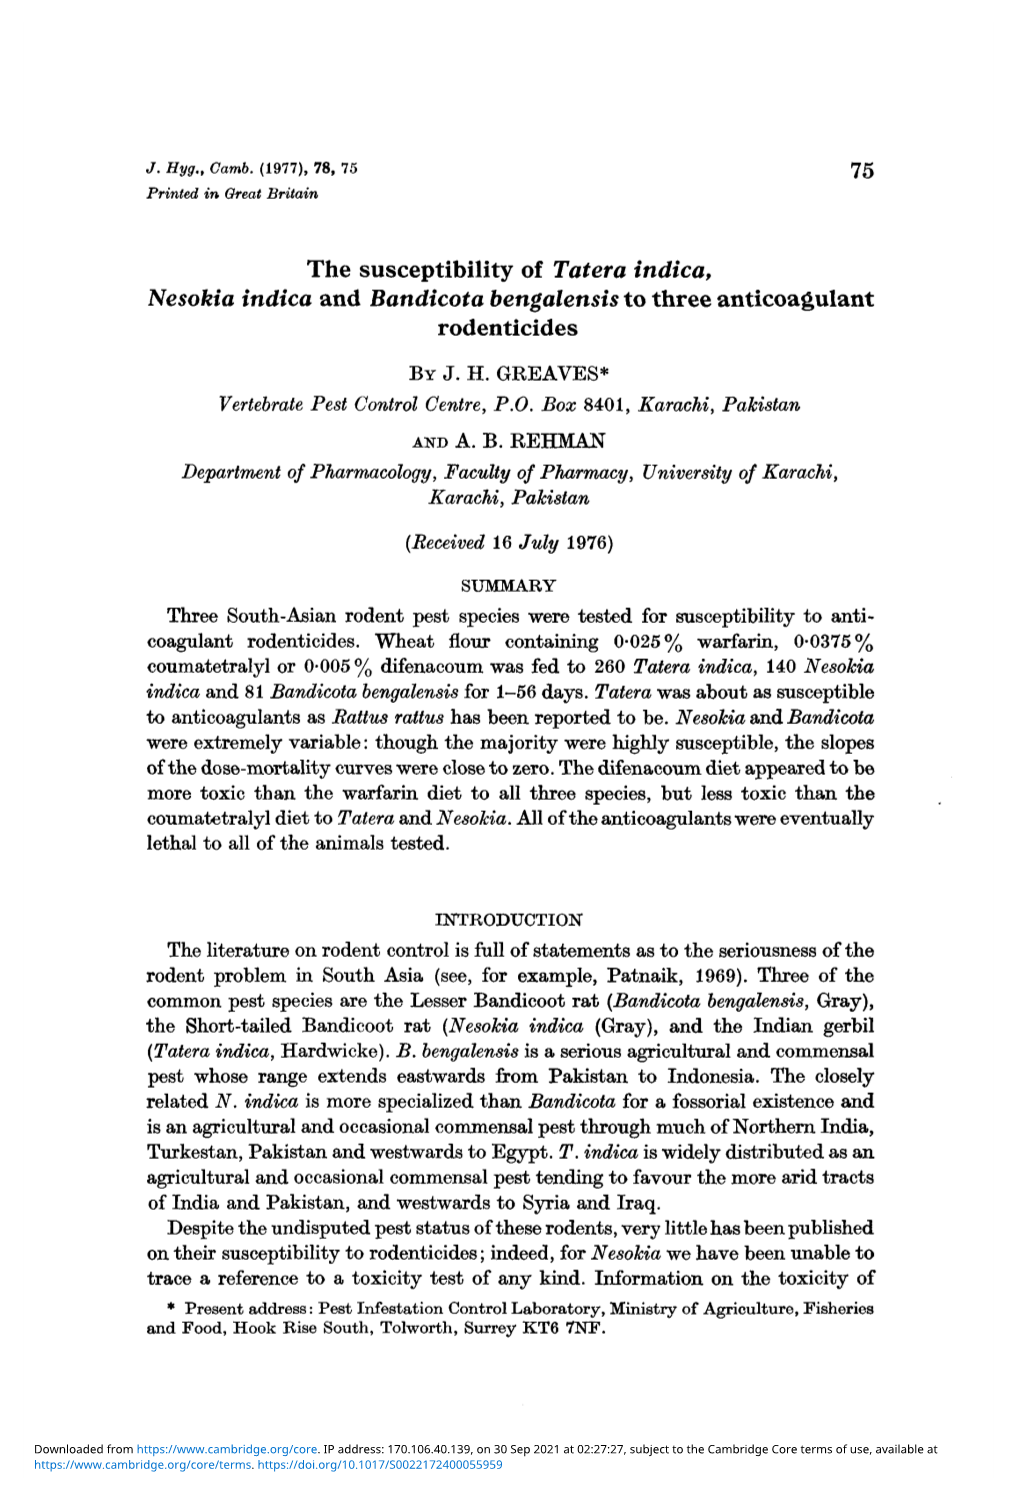 The Susceptibility of Tatera Indica, Nesokia Indica and Bandicota Bengalensis to Three Anticoagulant Rodenticides